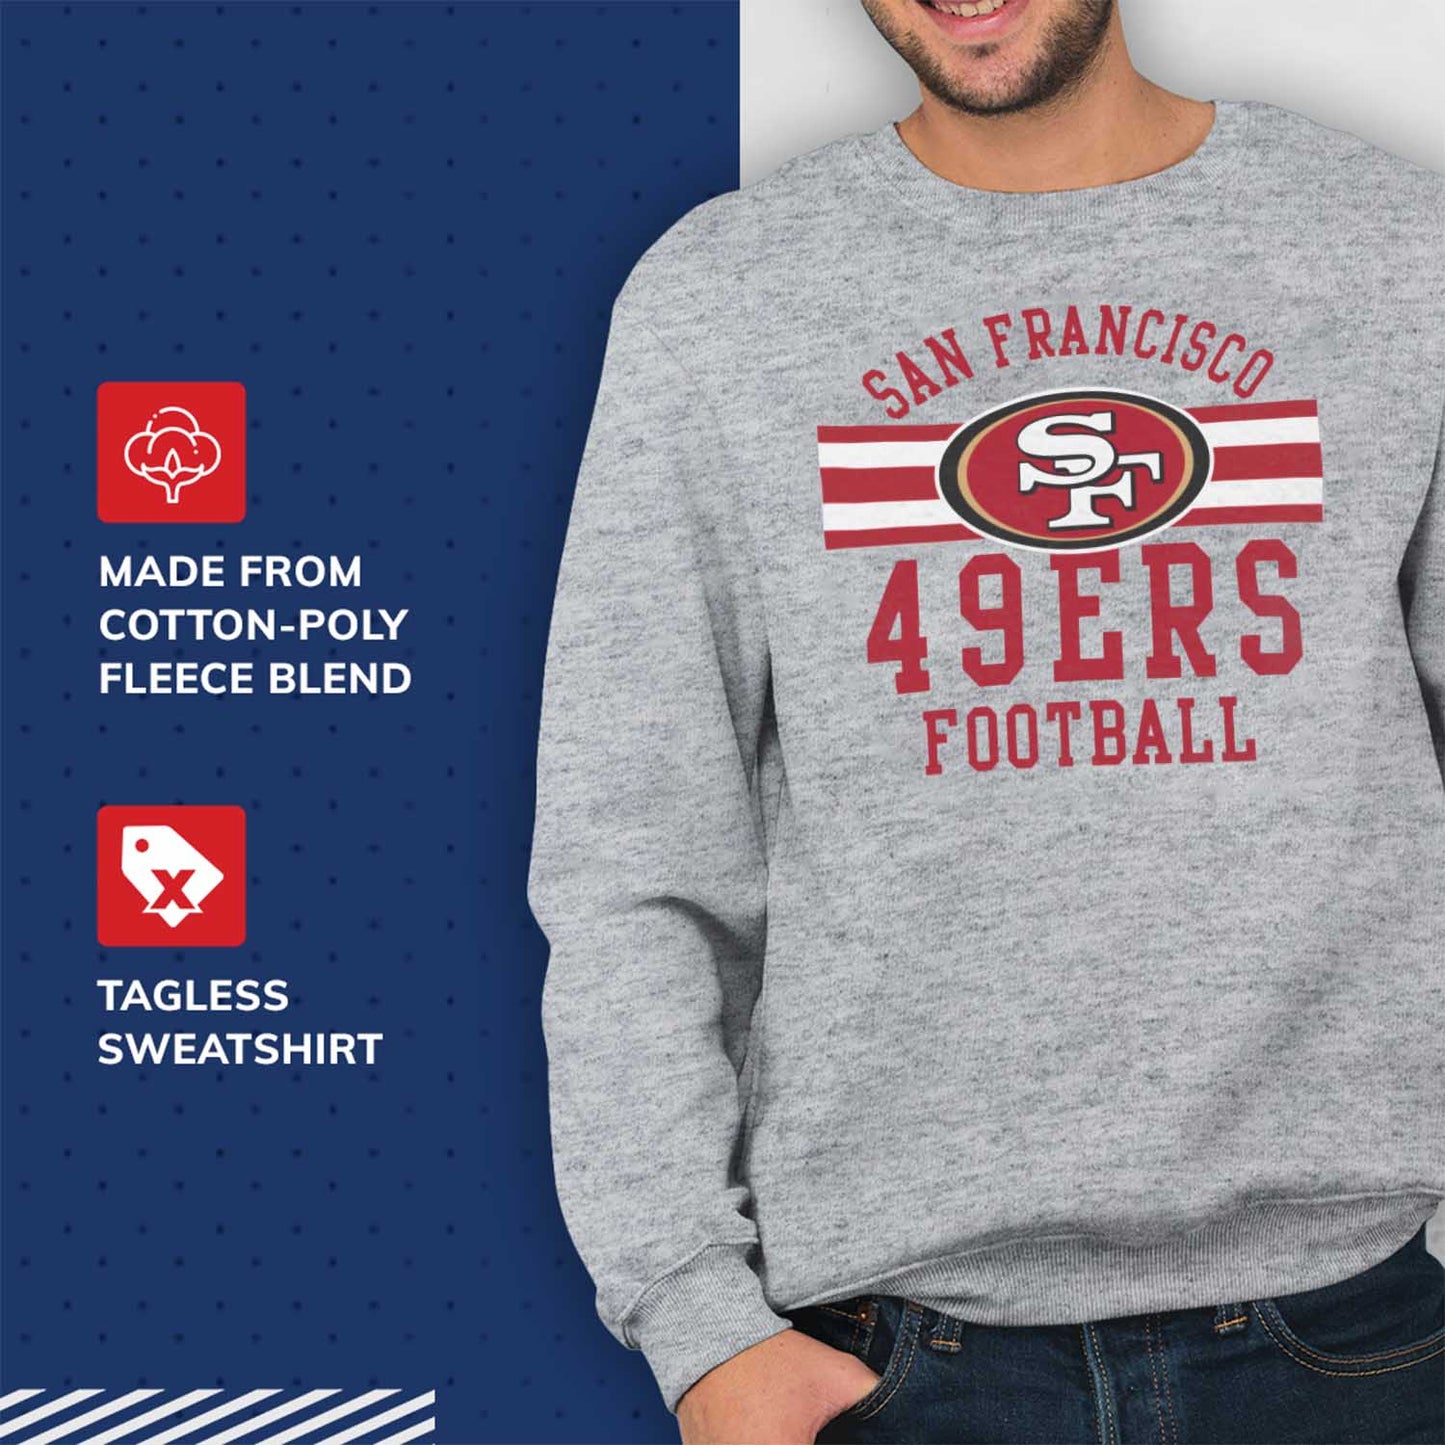 San Francisco 49ers NFL Team Stripe Crew Sweatshirt - Sport Gray